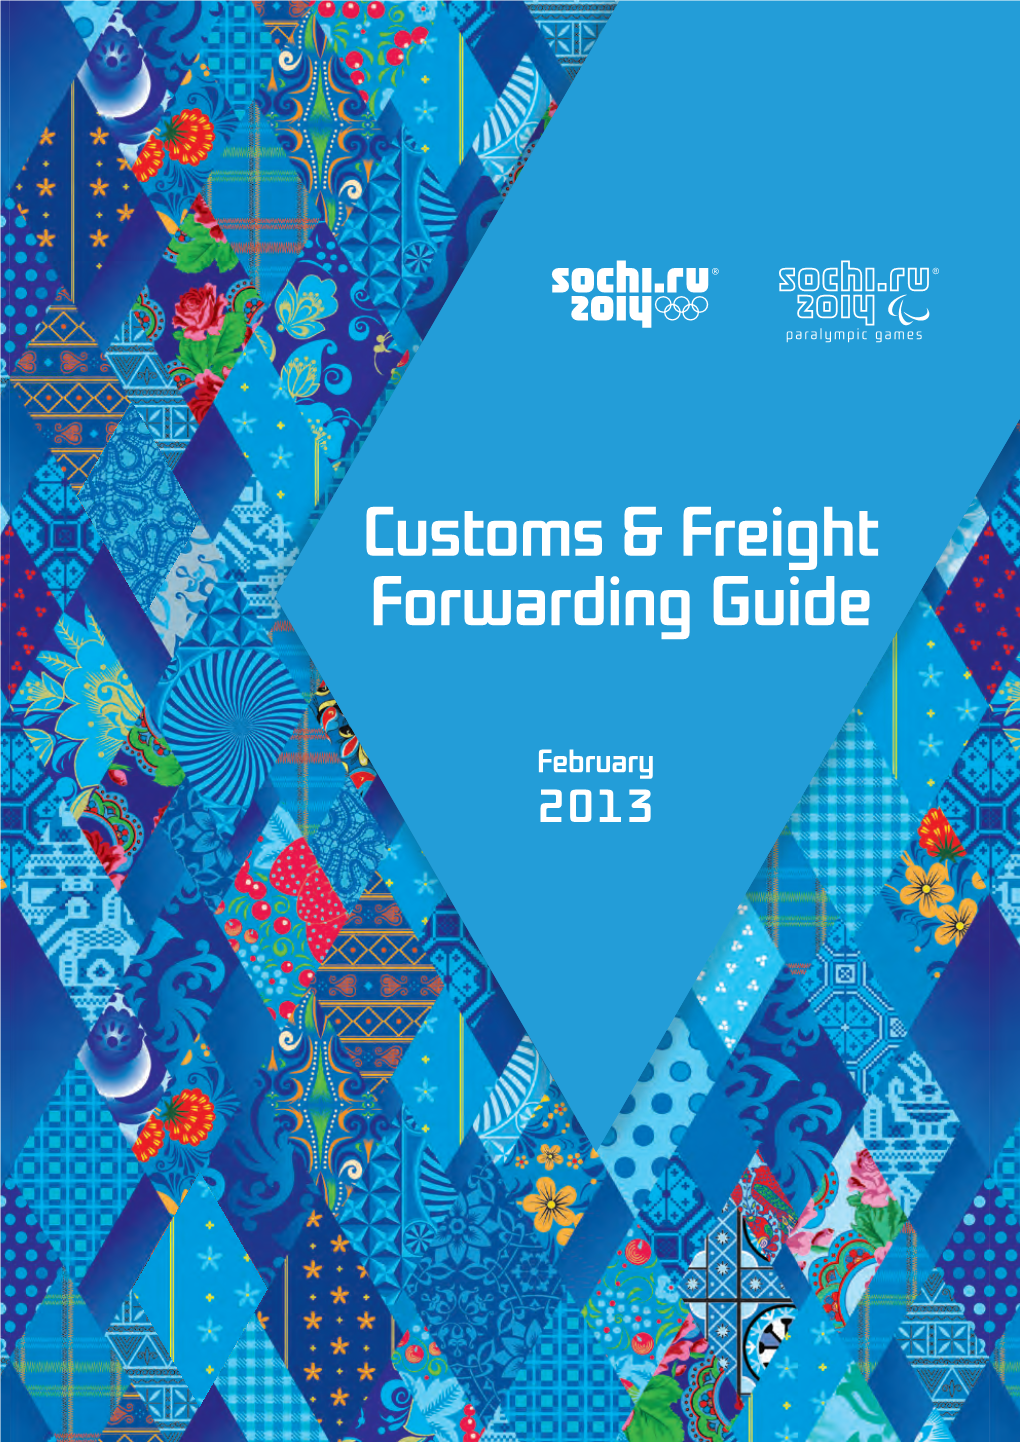 Customs & Freight Forwarding Guide